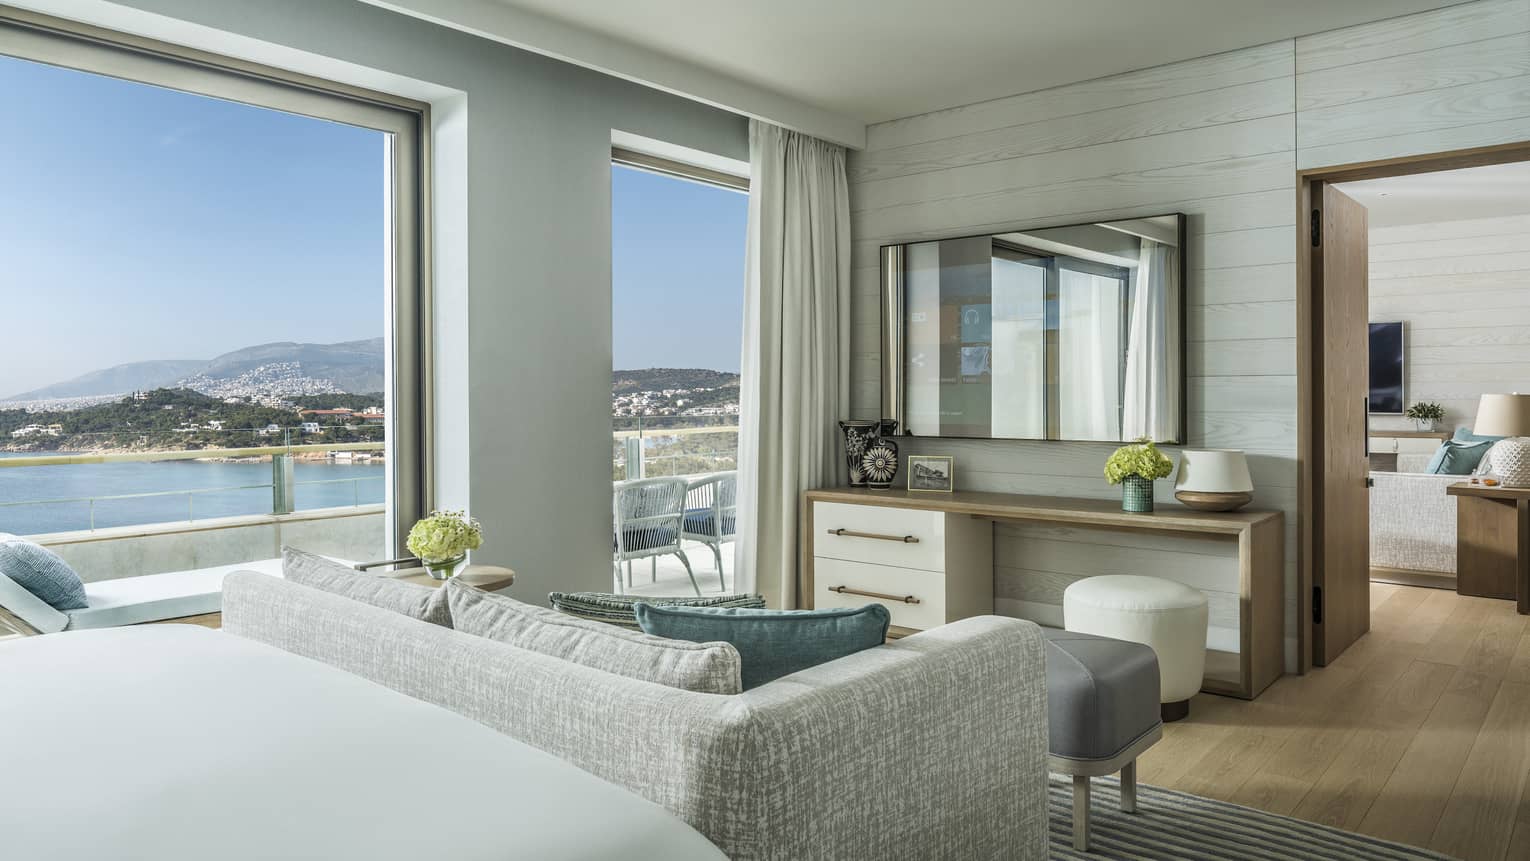 Arion One Bedroom Suite with bed, grey patterned loveseat, doorway to living area, ocean views